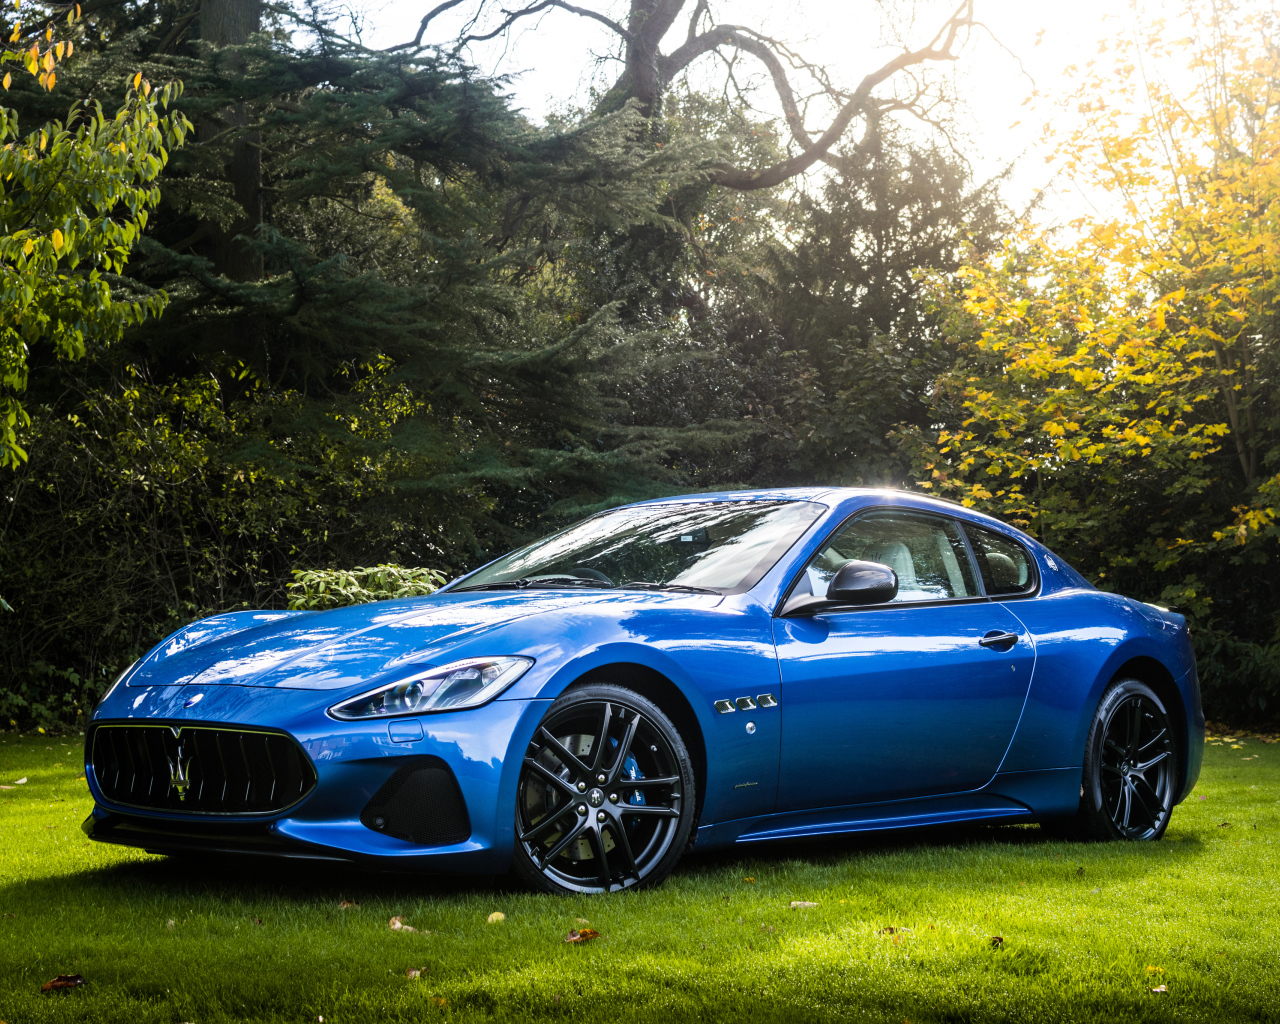 Blue car Maserati GranTurismo in the background of trees